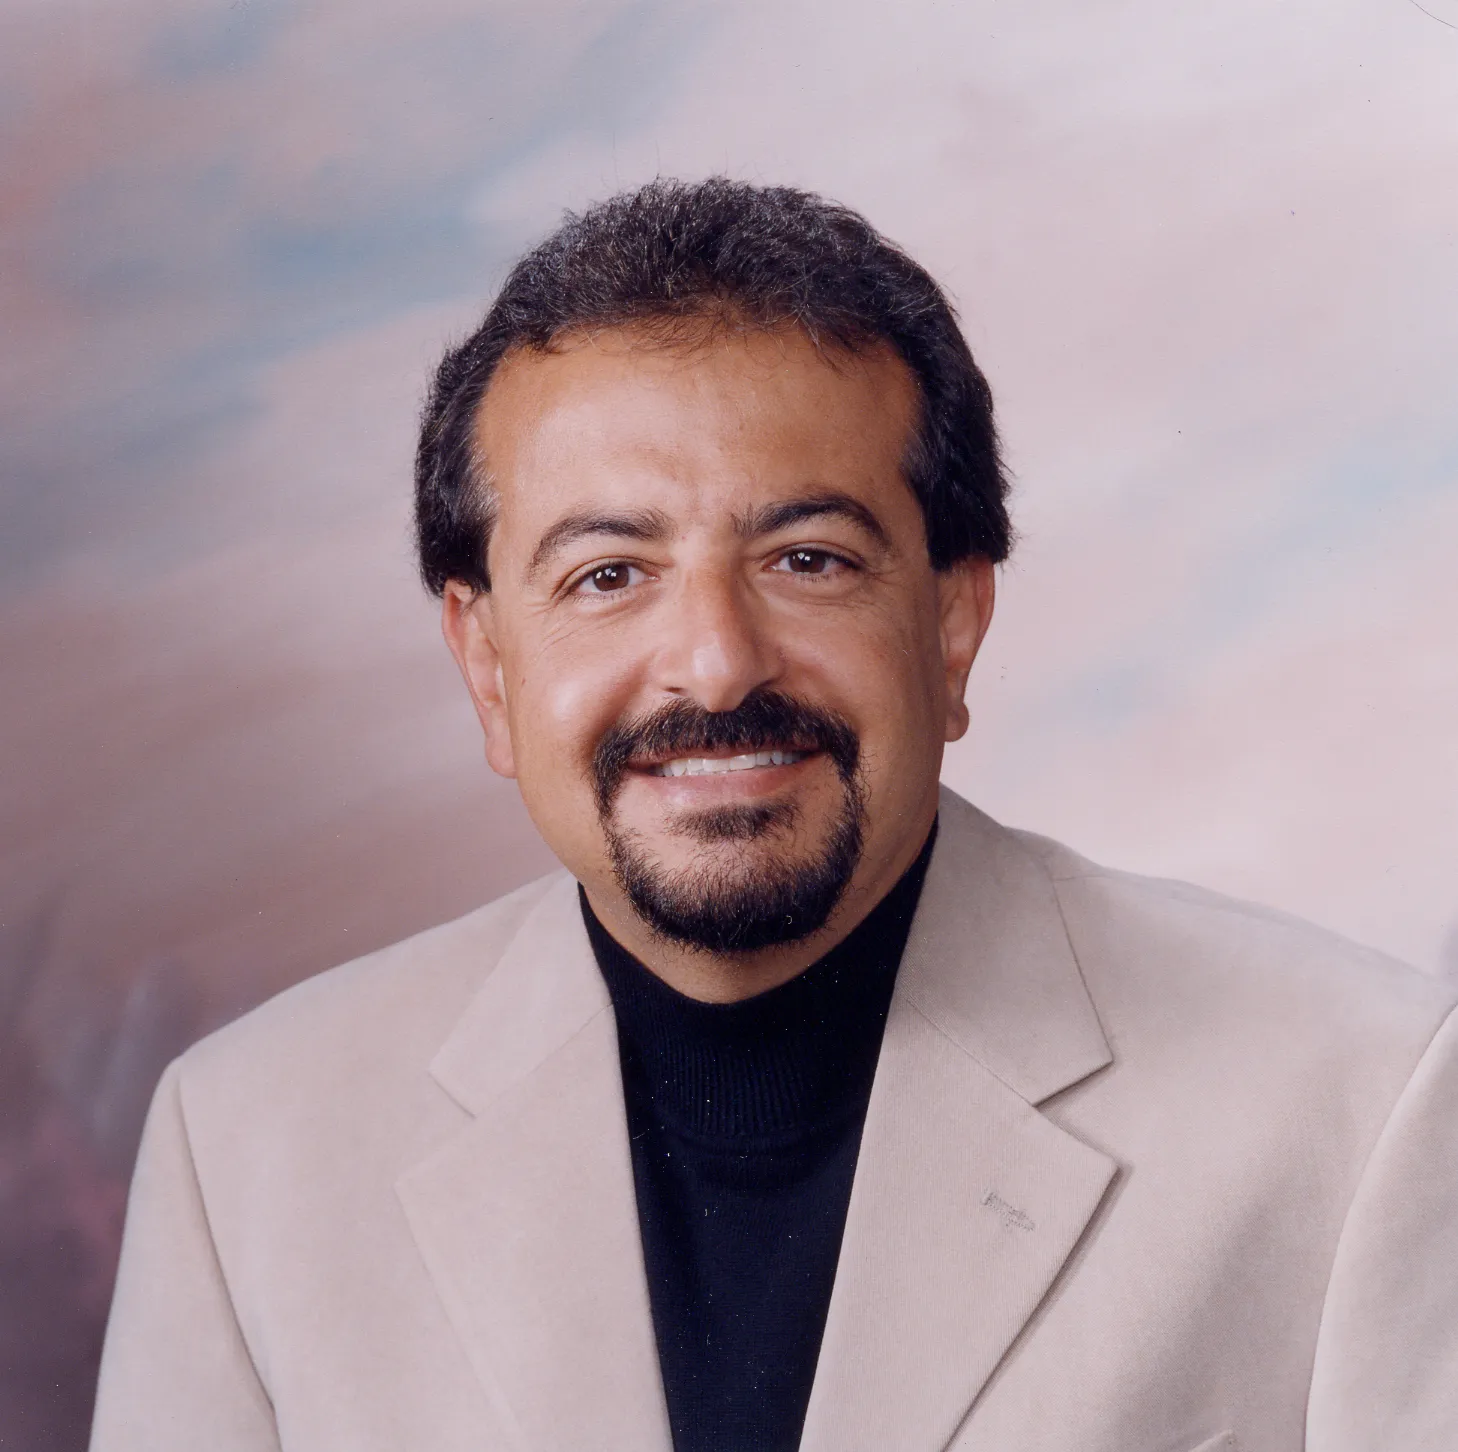 Dr. Joe Rubino